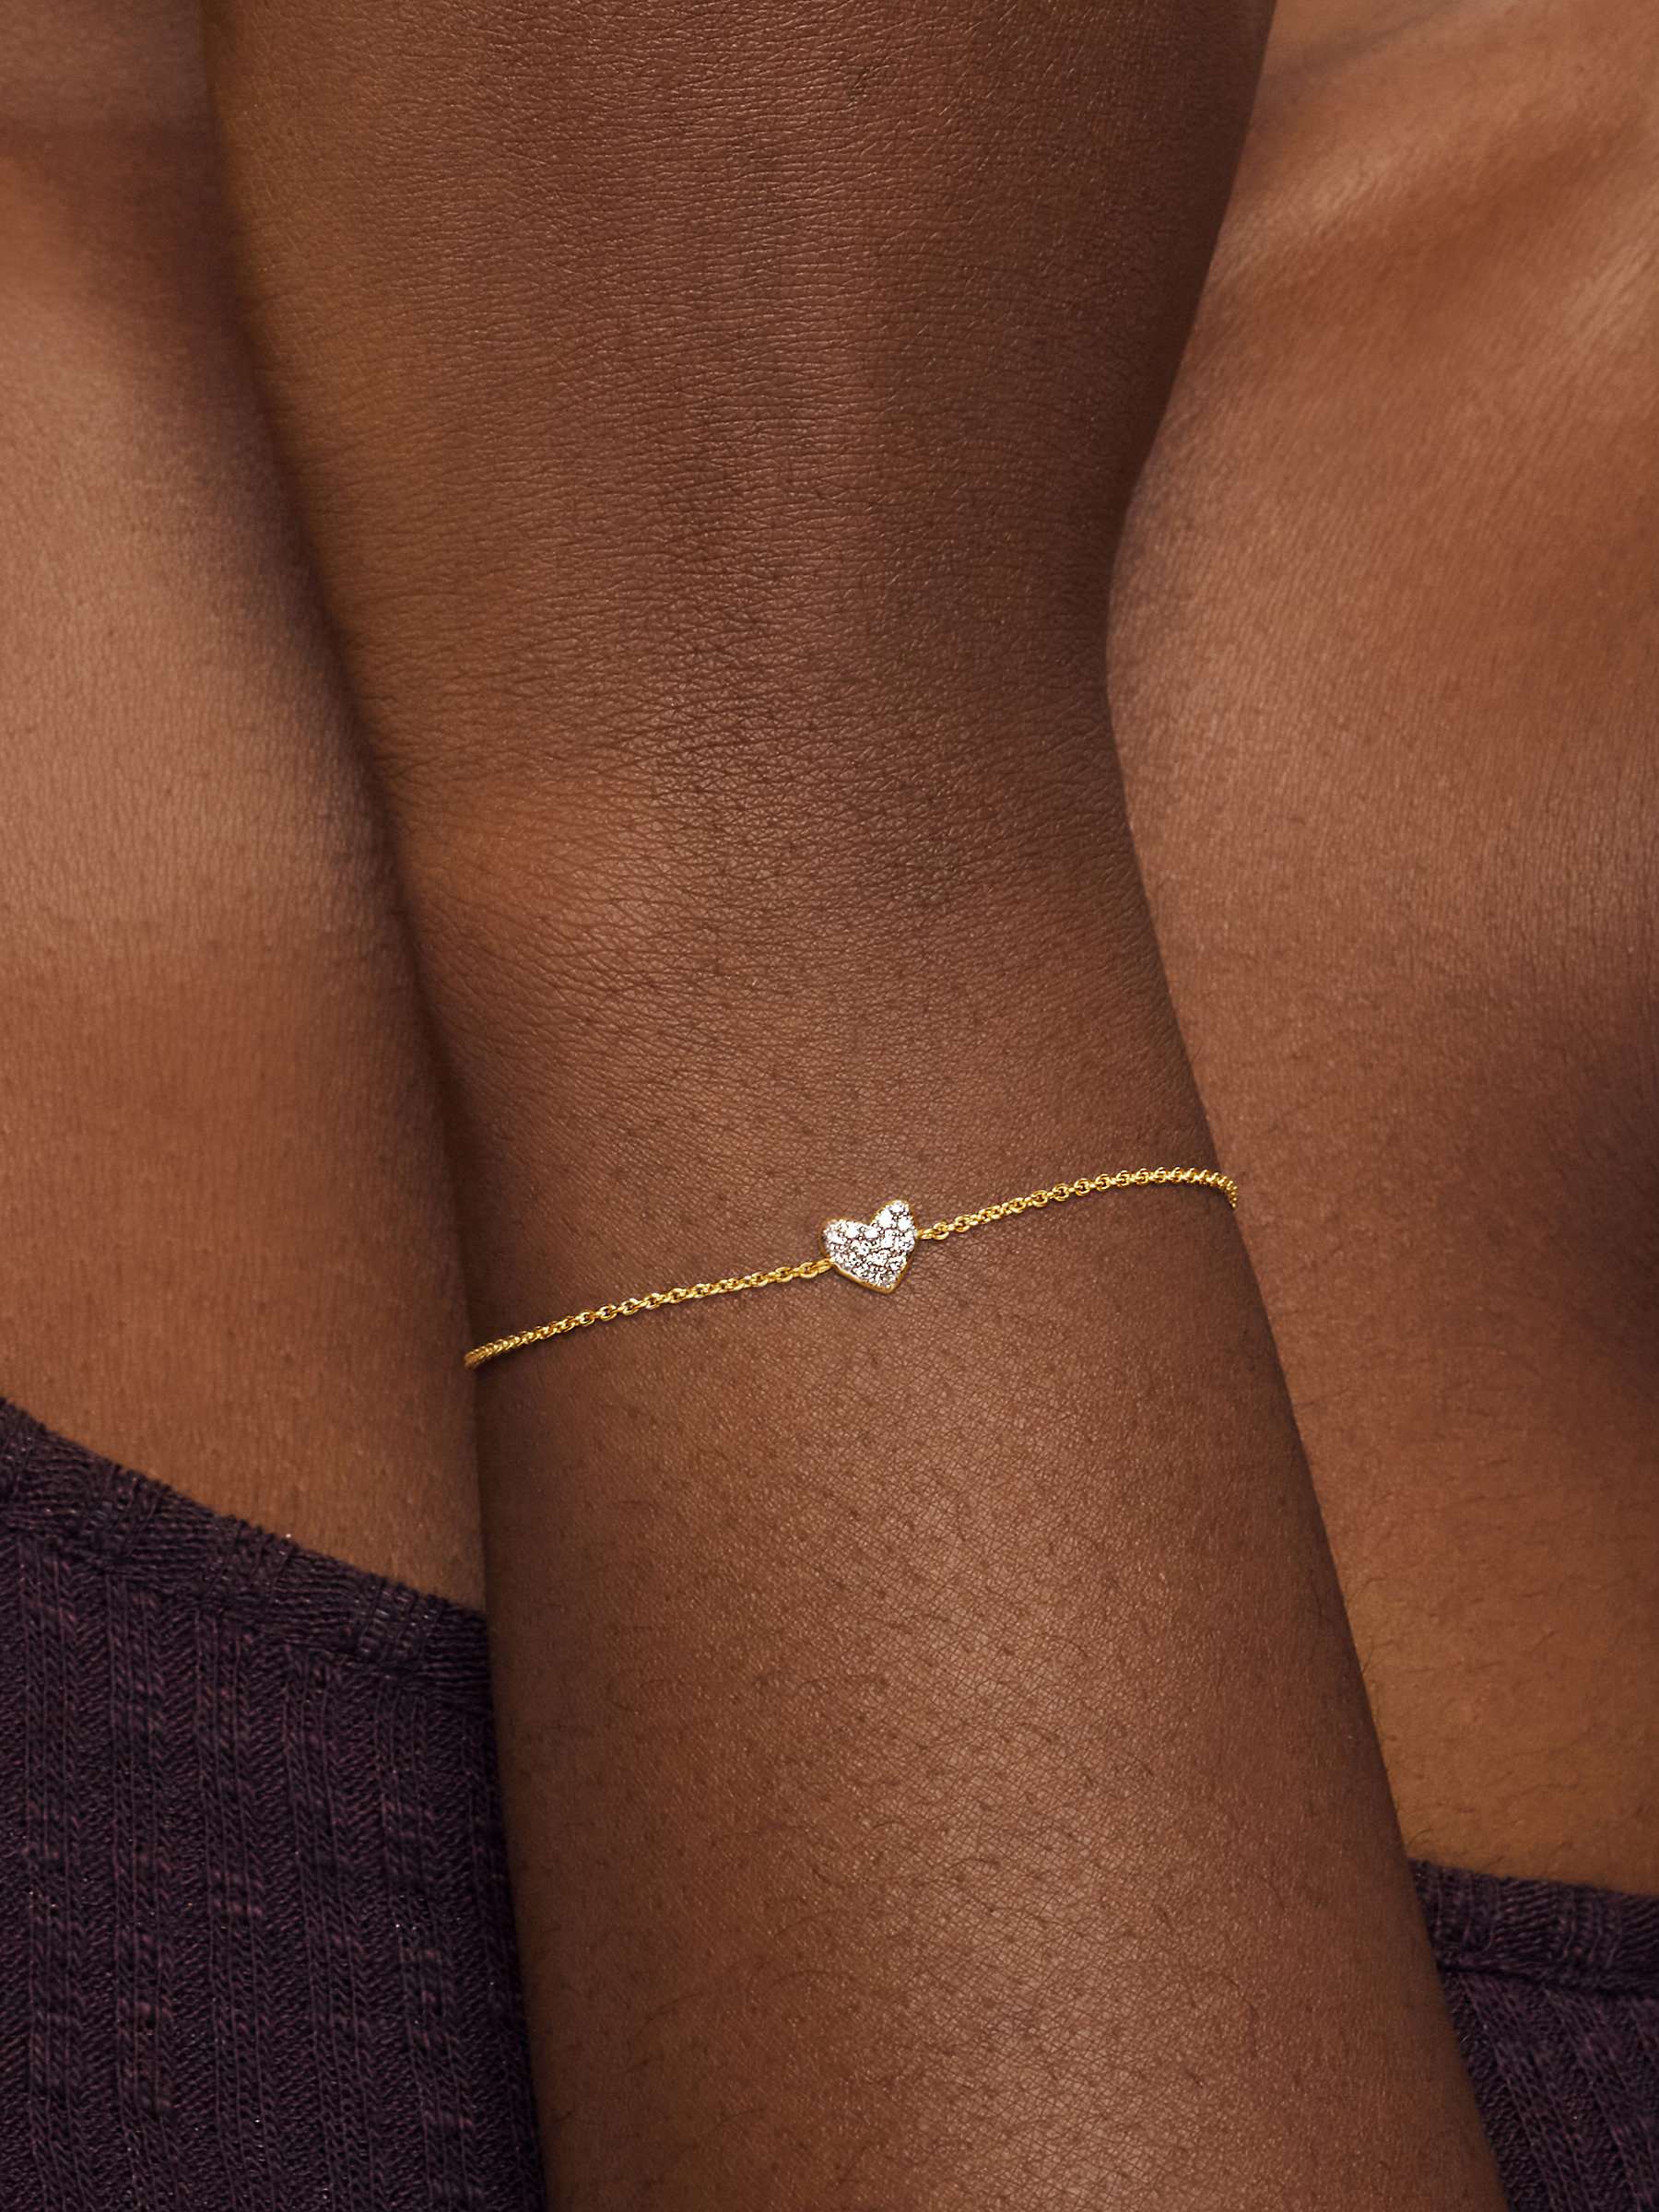 Buy Monica Vinader Lab Grown Diamond Heart Chain Bracelet, Gold Online at johnlewis.com